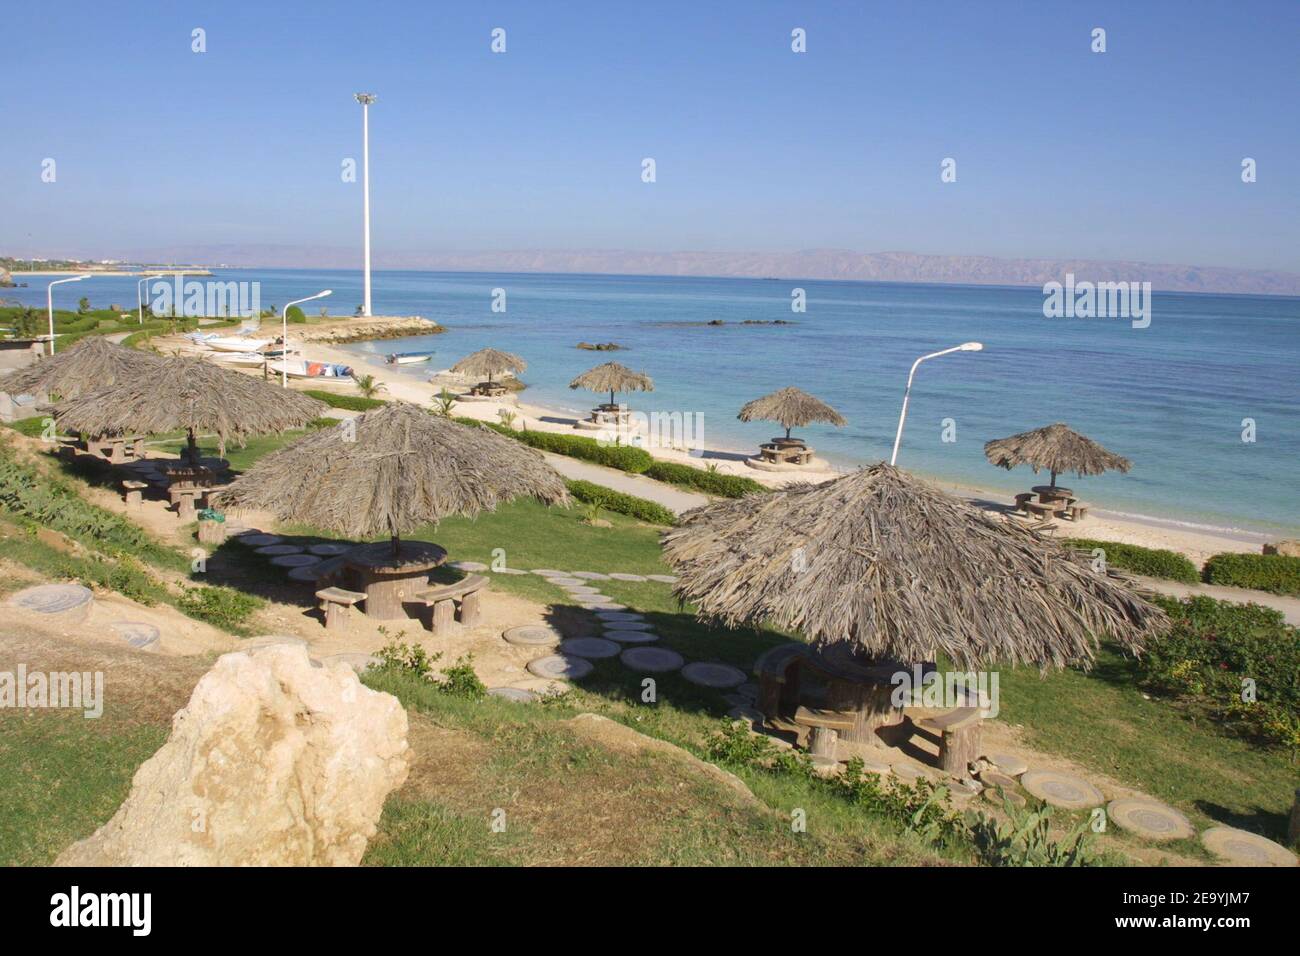 A beach of Iran's island Kish, in the Persian Gulf, 12 kilometres off the Iranian coasts, in April 2004. Photo by Orand-Viala/ABACA. Stock Photo